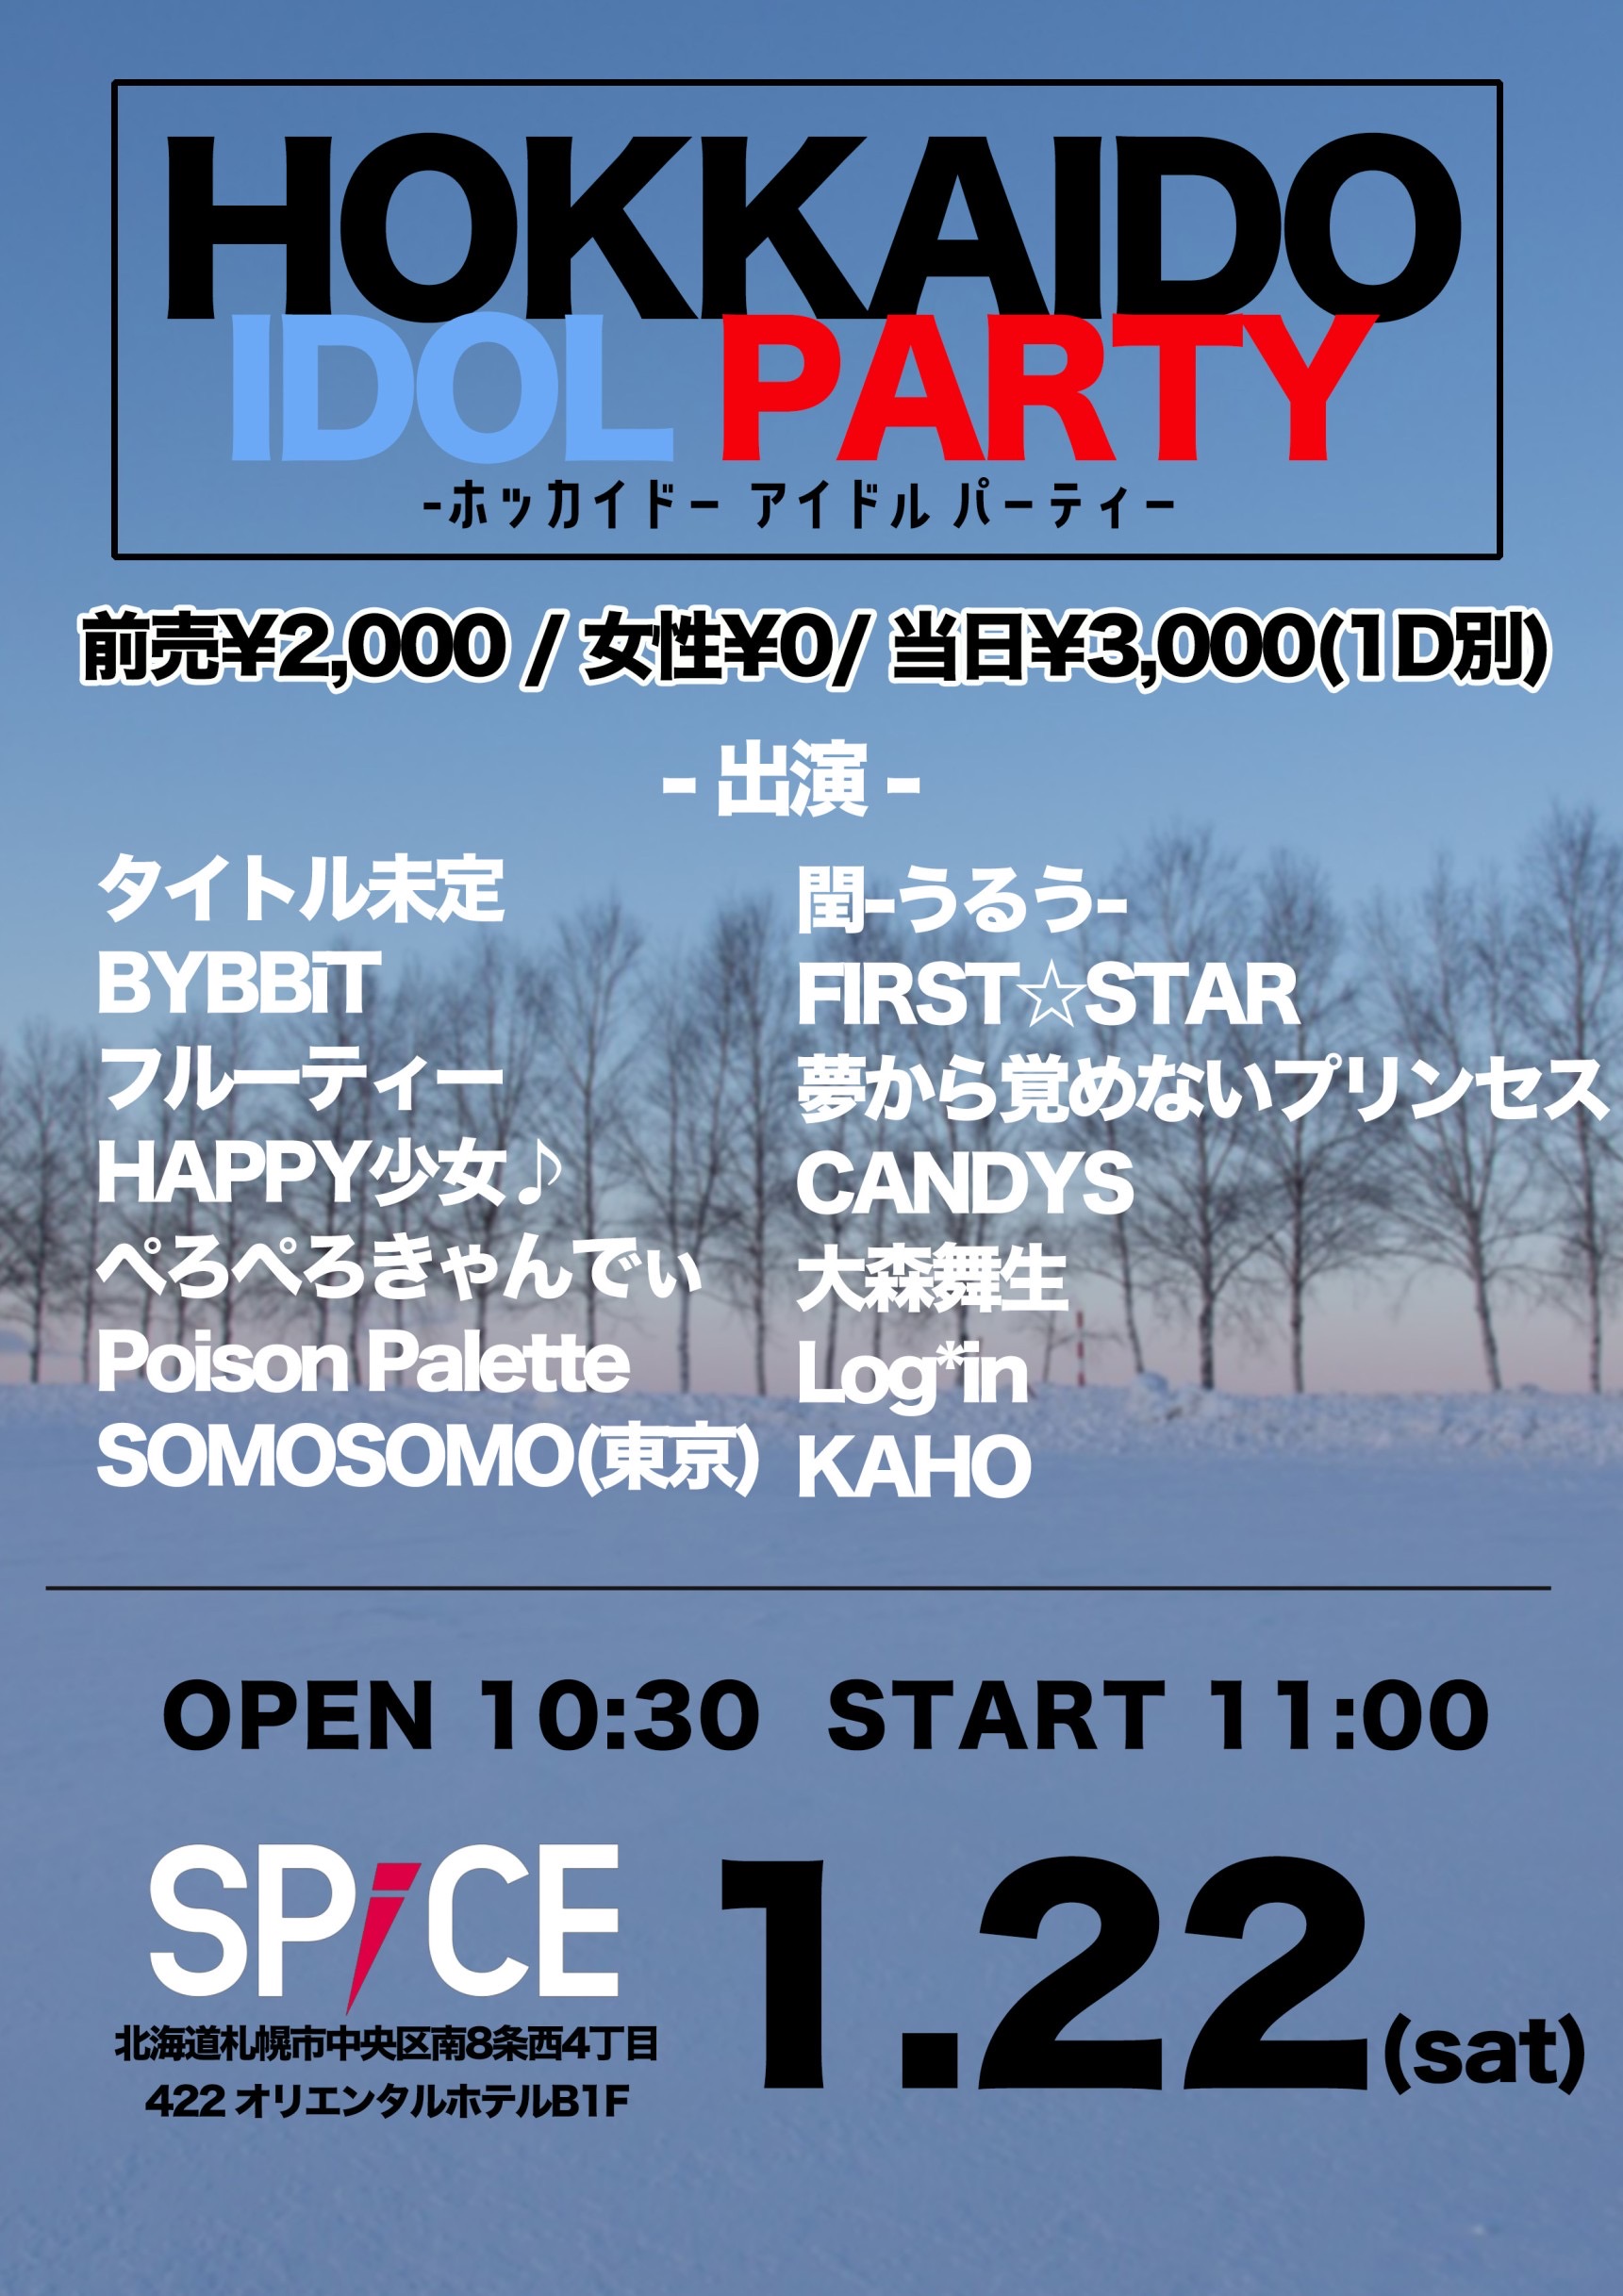 HOKKAIDO IDOL PARTY